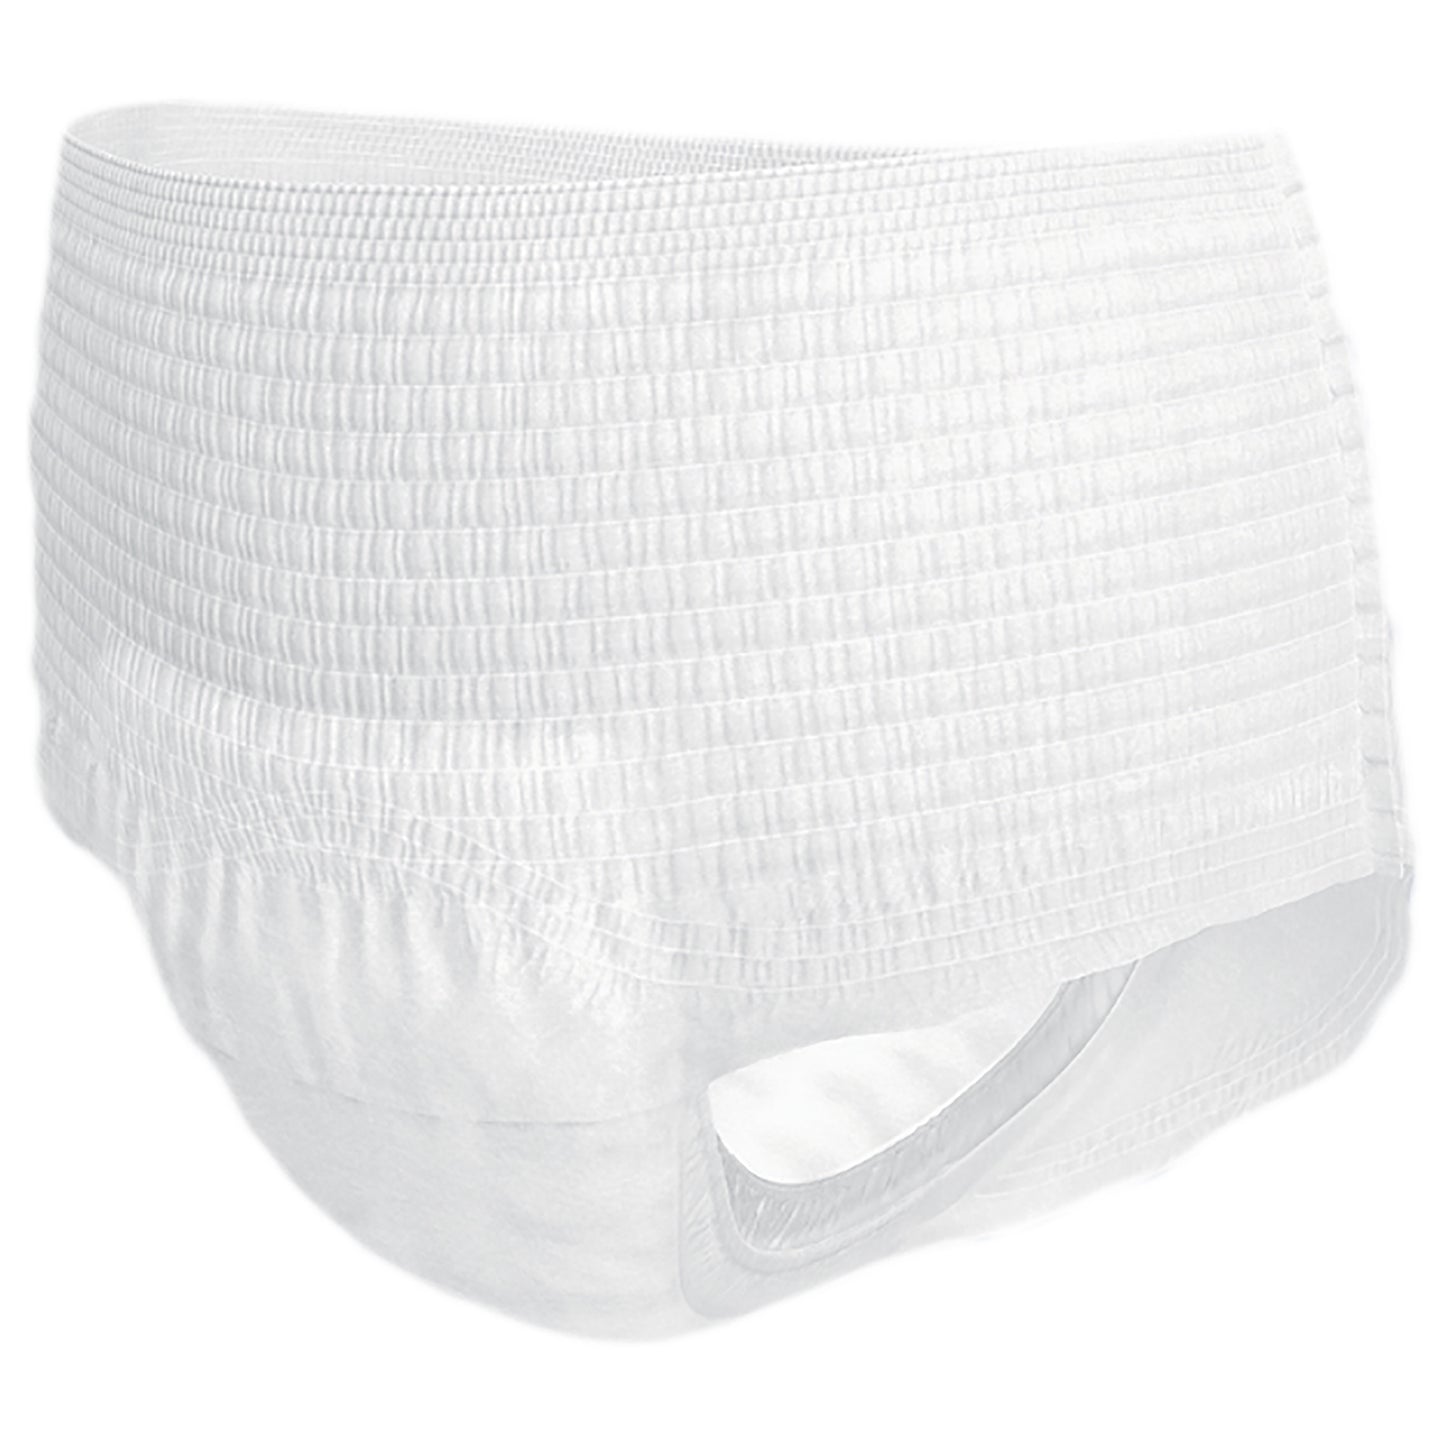 Tena Plus Absorbent Underwear, Small - 72631